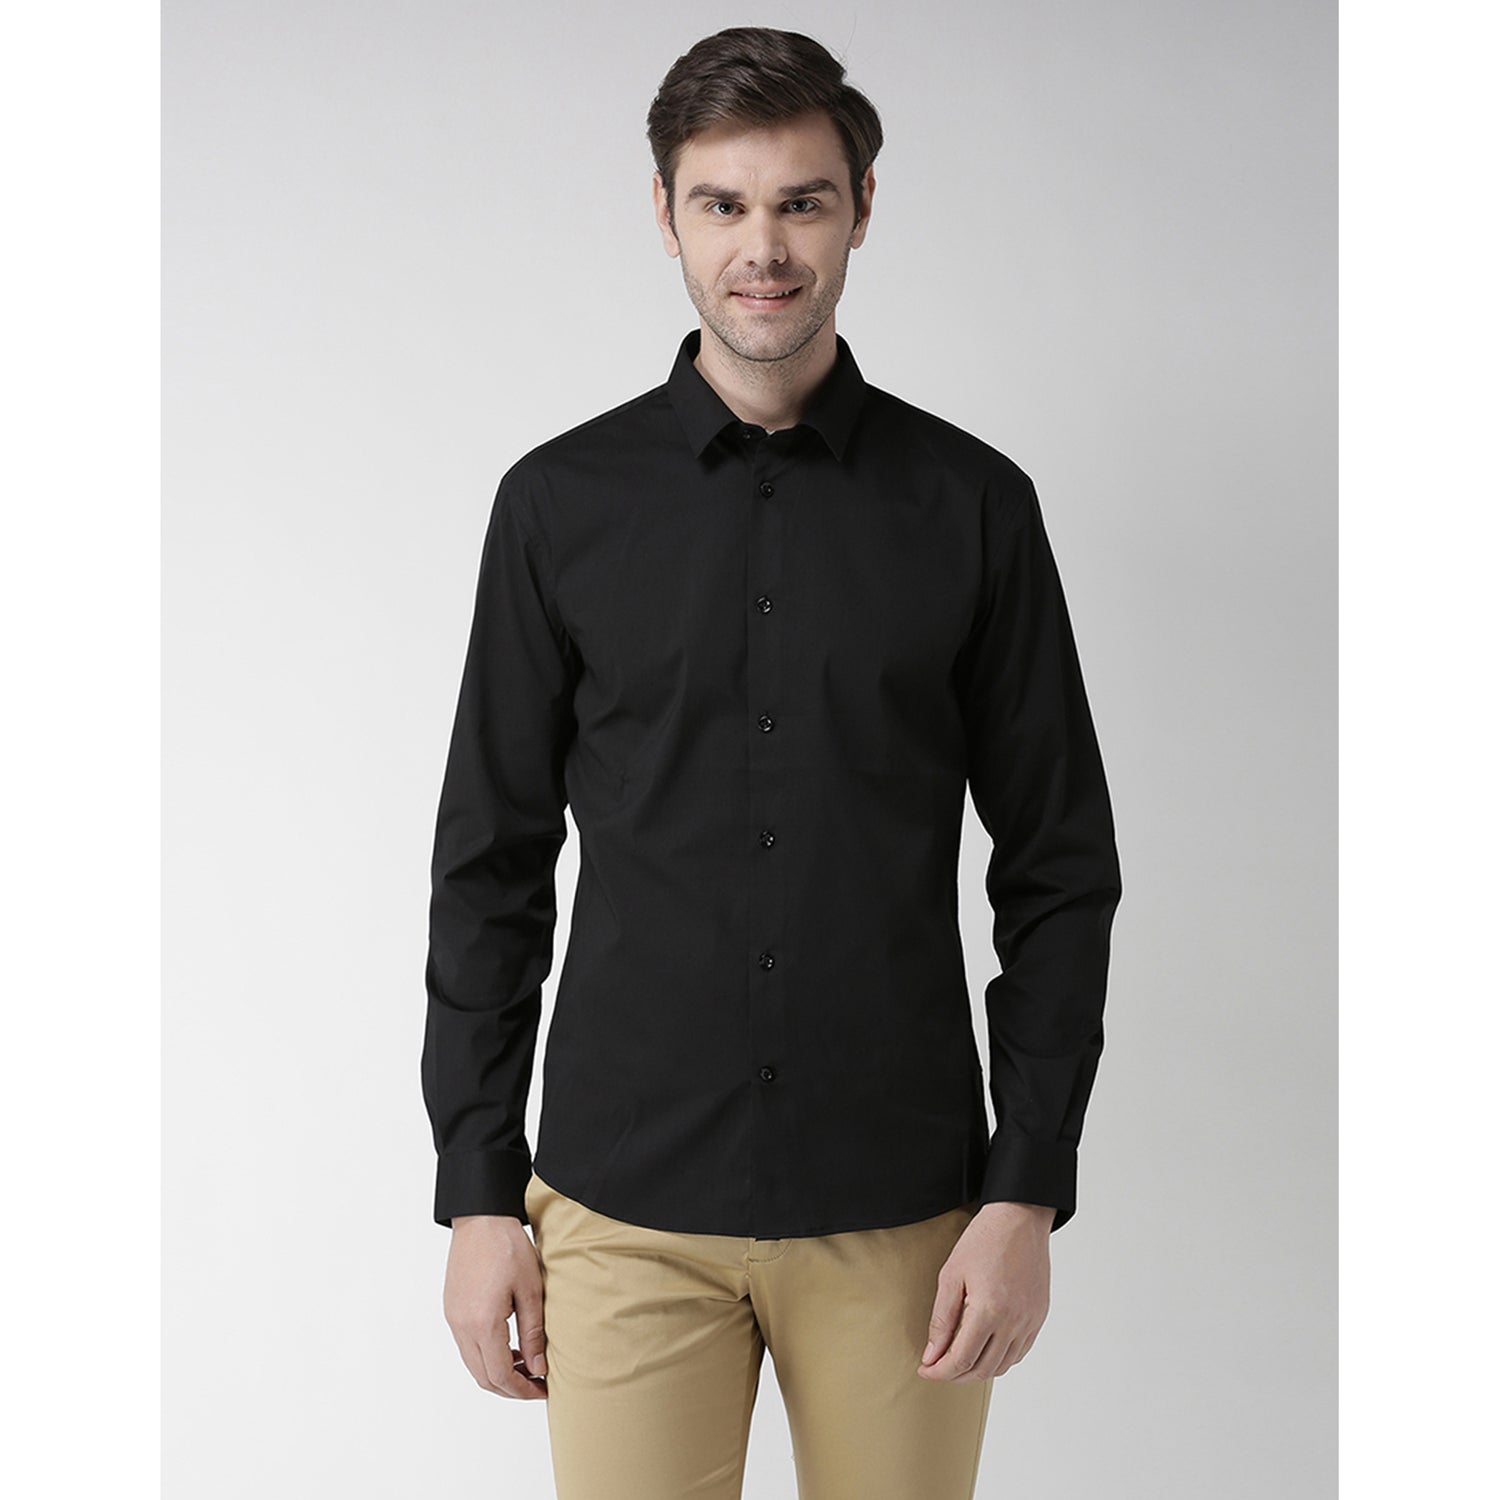 Black Slim Fit Casual Cotton Shirt (MASANTAL5)